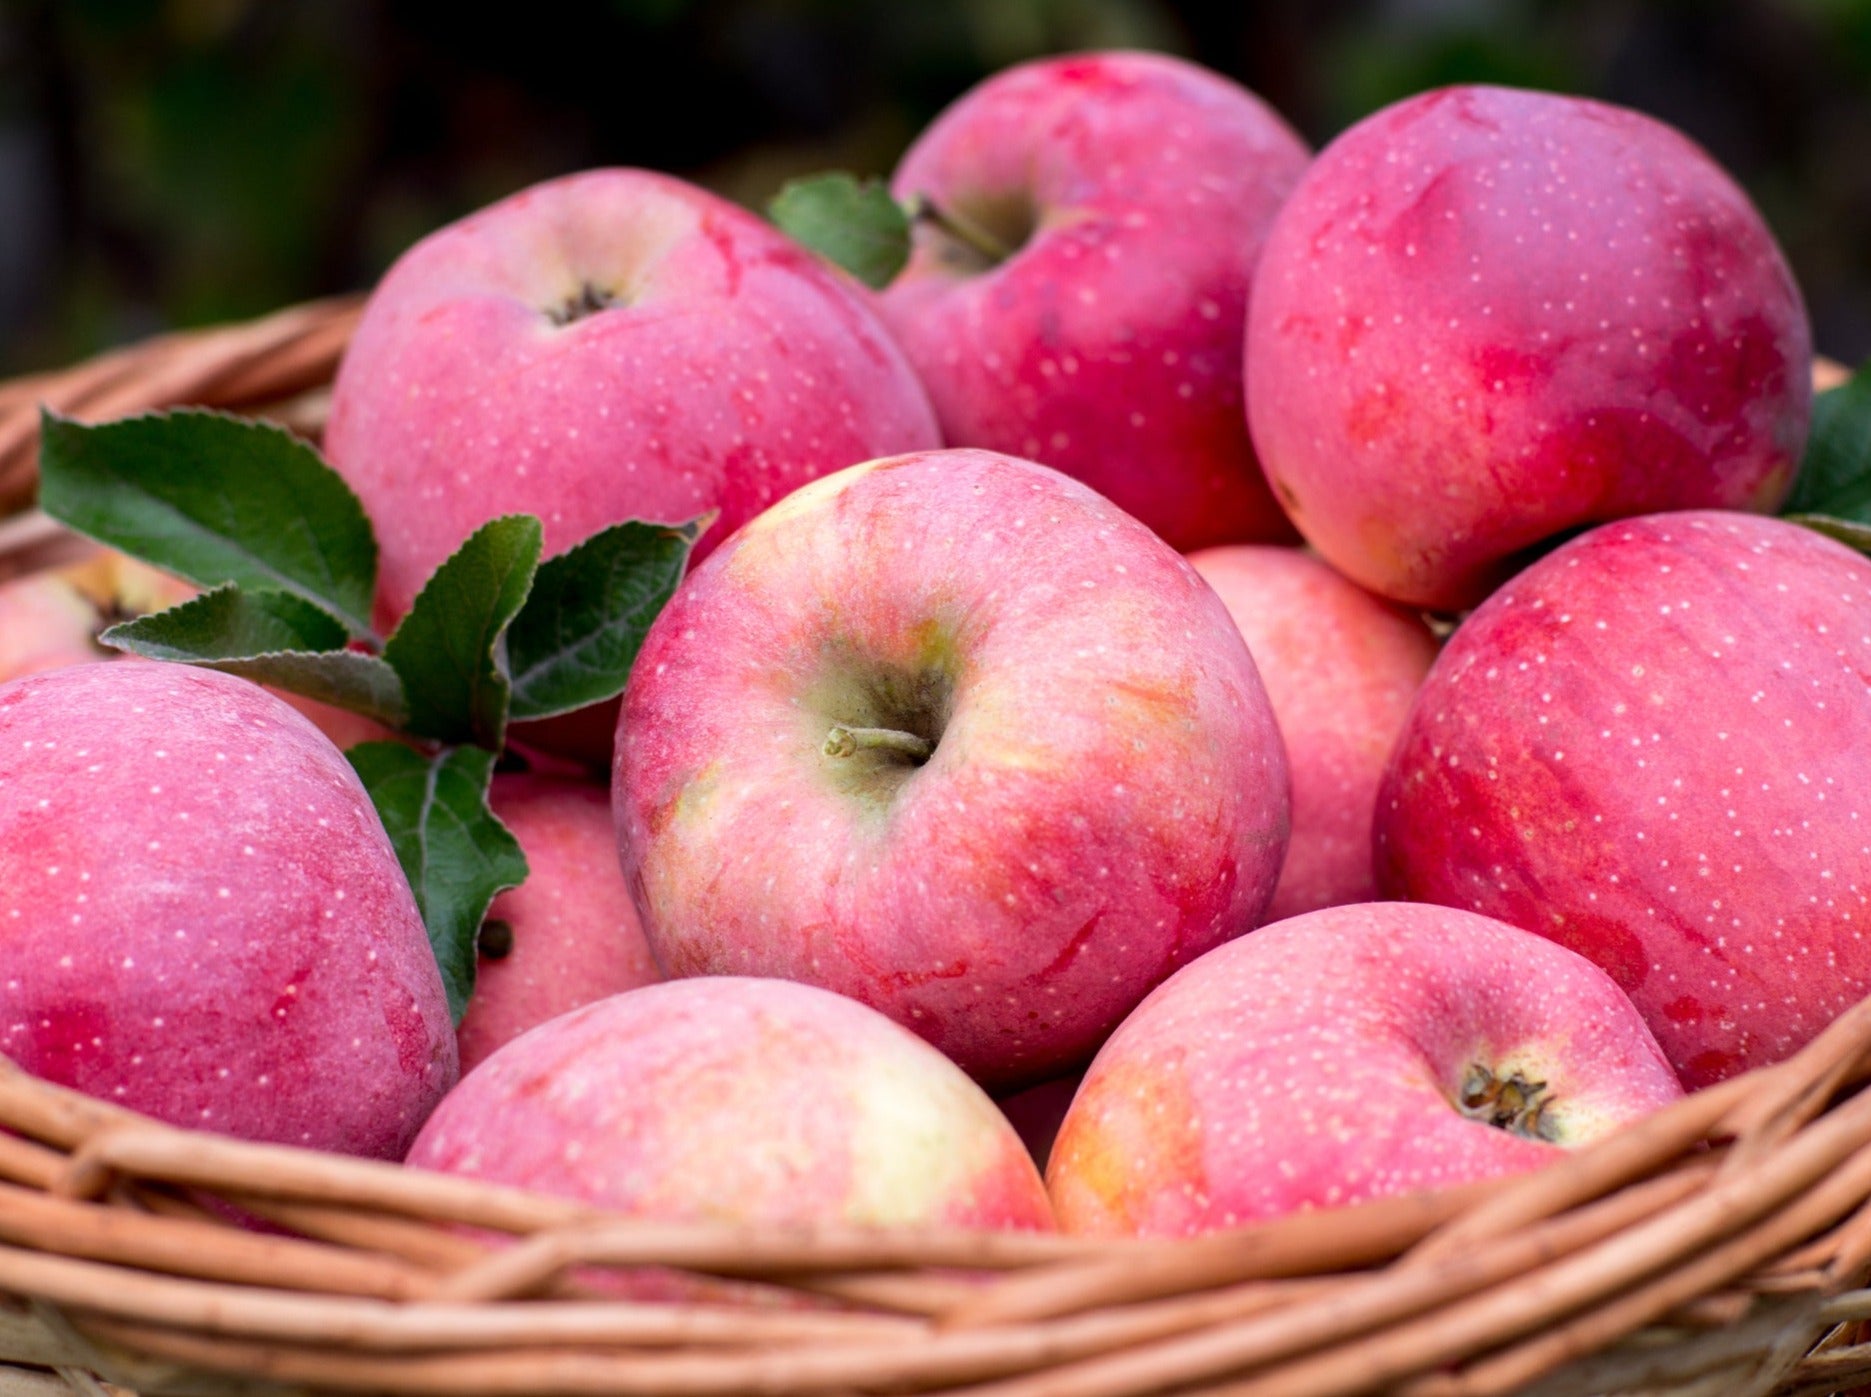 NZ Organic Apples - Pink Lady